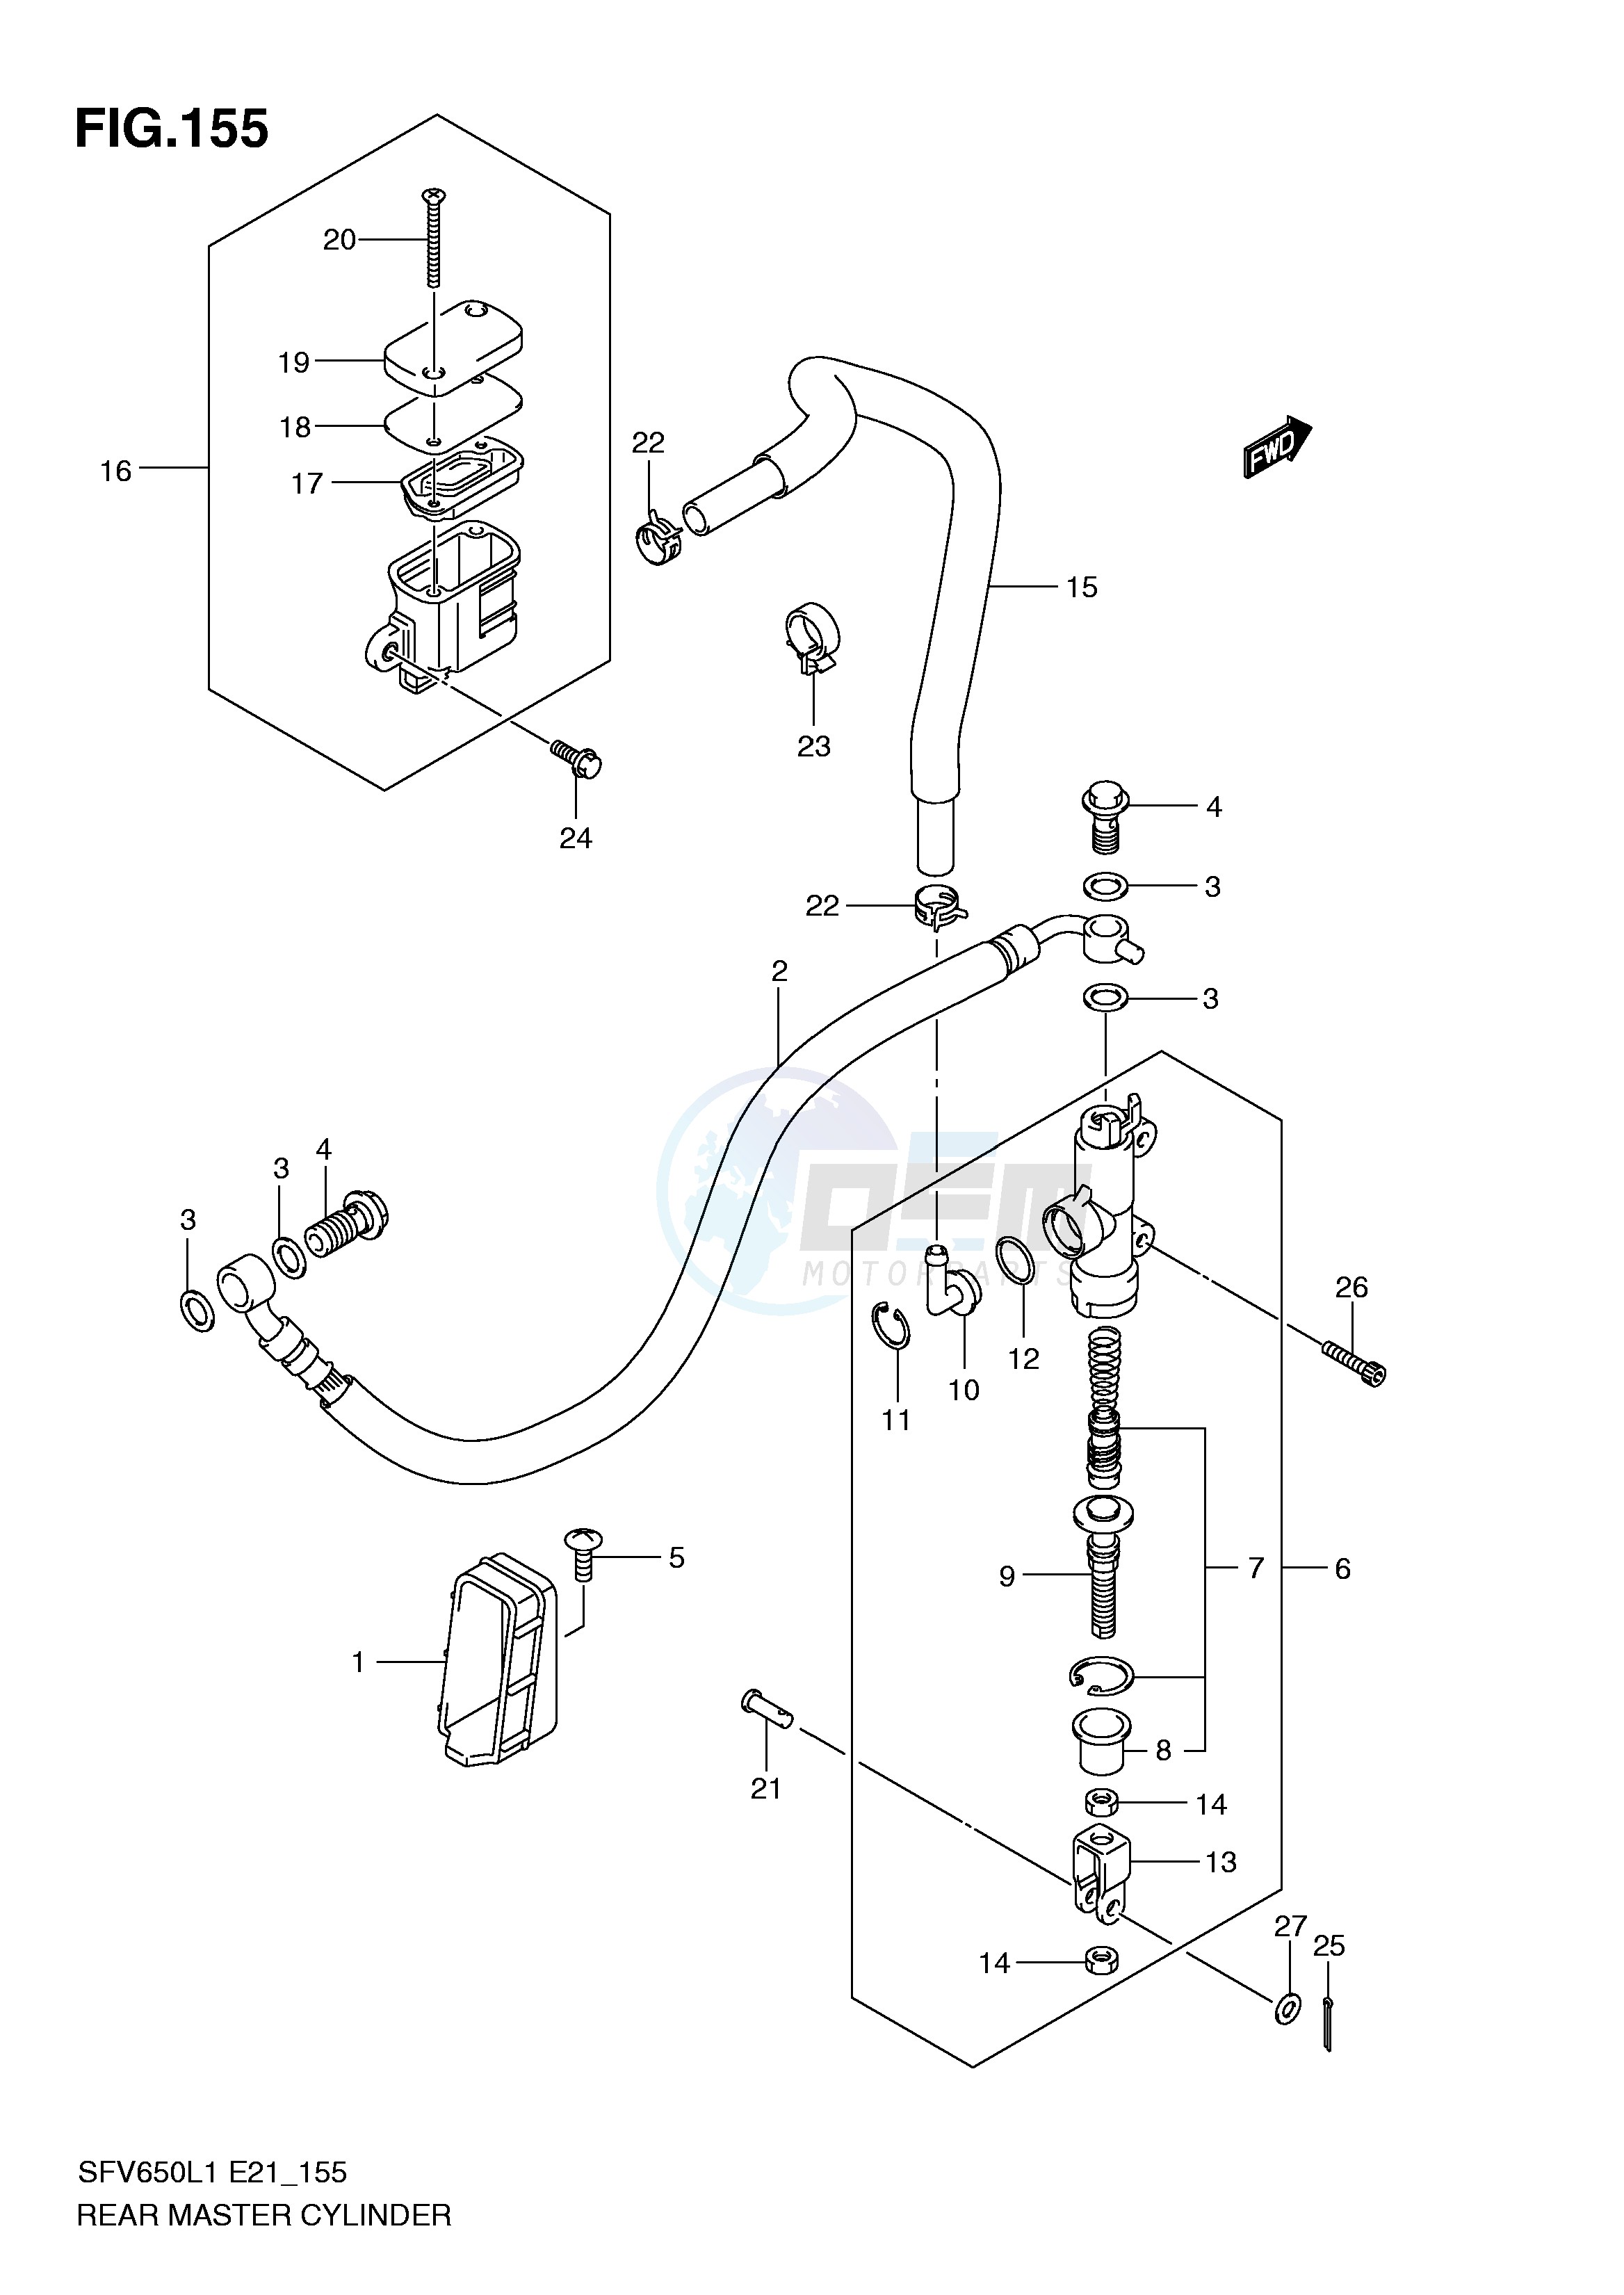 REAR MASTER CYLINDER (SFV650UL1 E24) blueprint